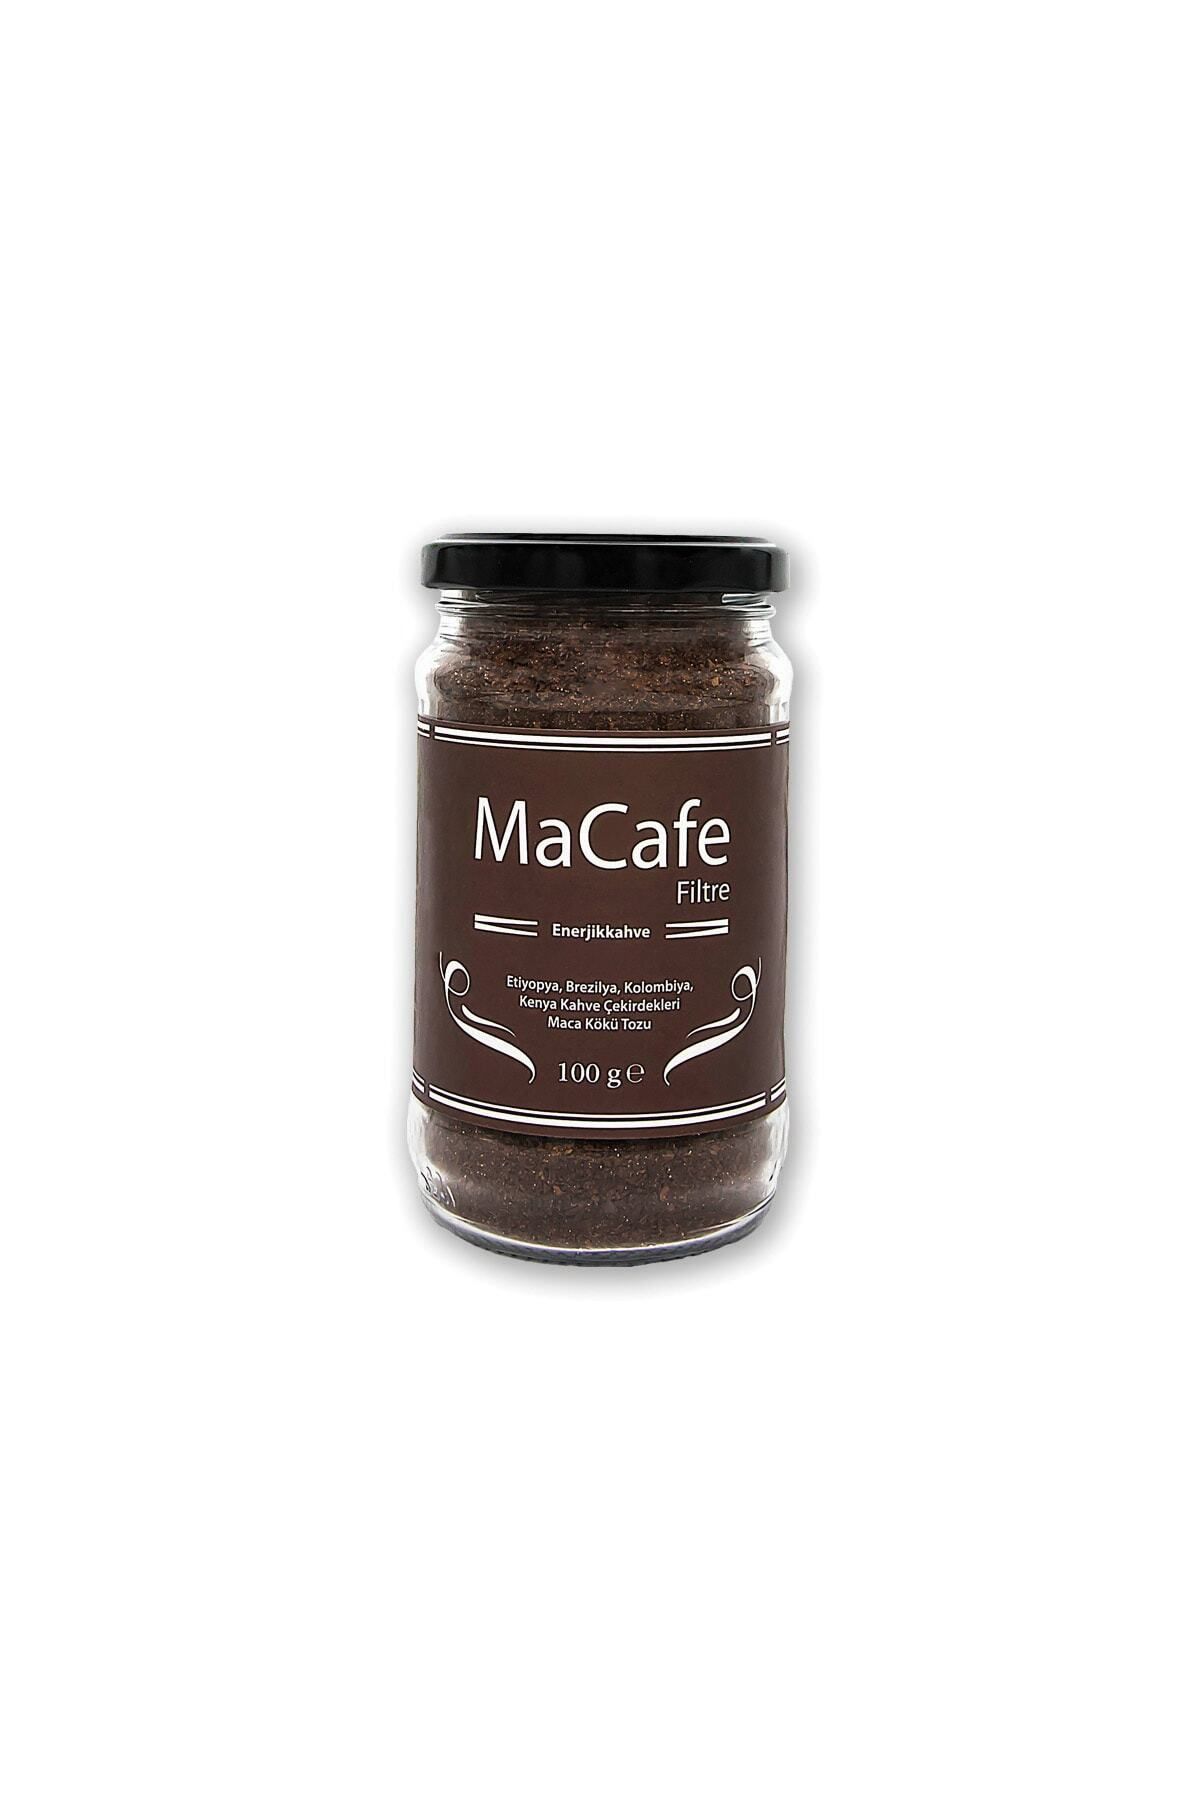 MaCafe Maca Kökü Tozlu Filtre Kahve 100 G